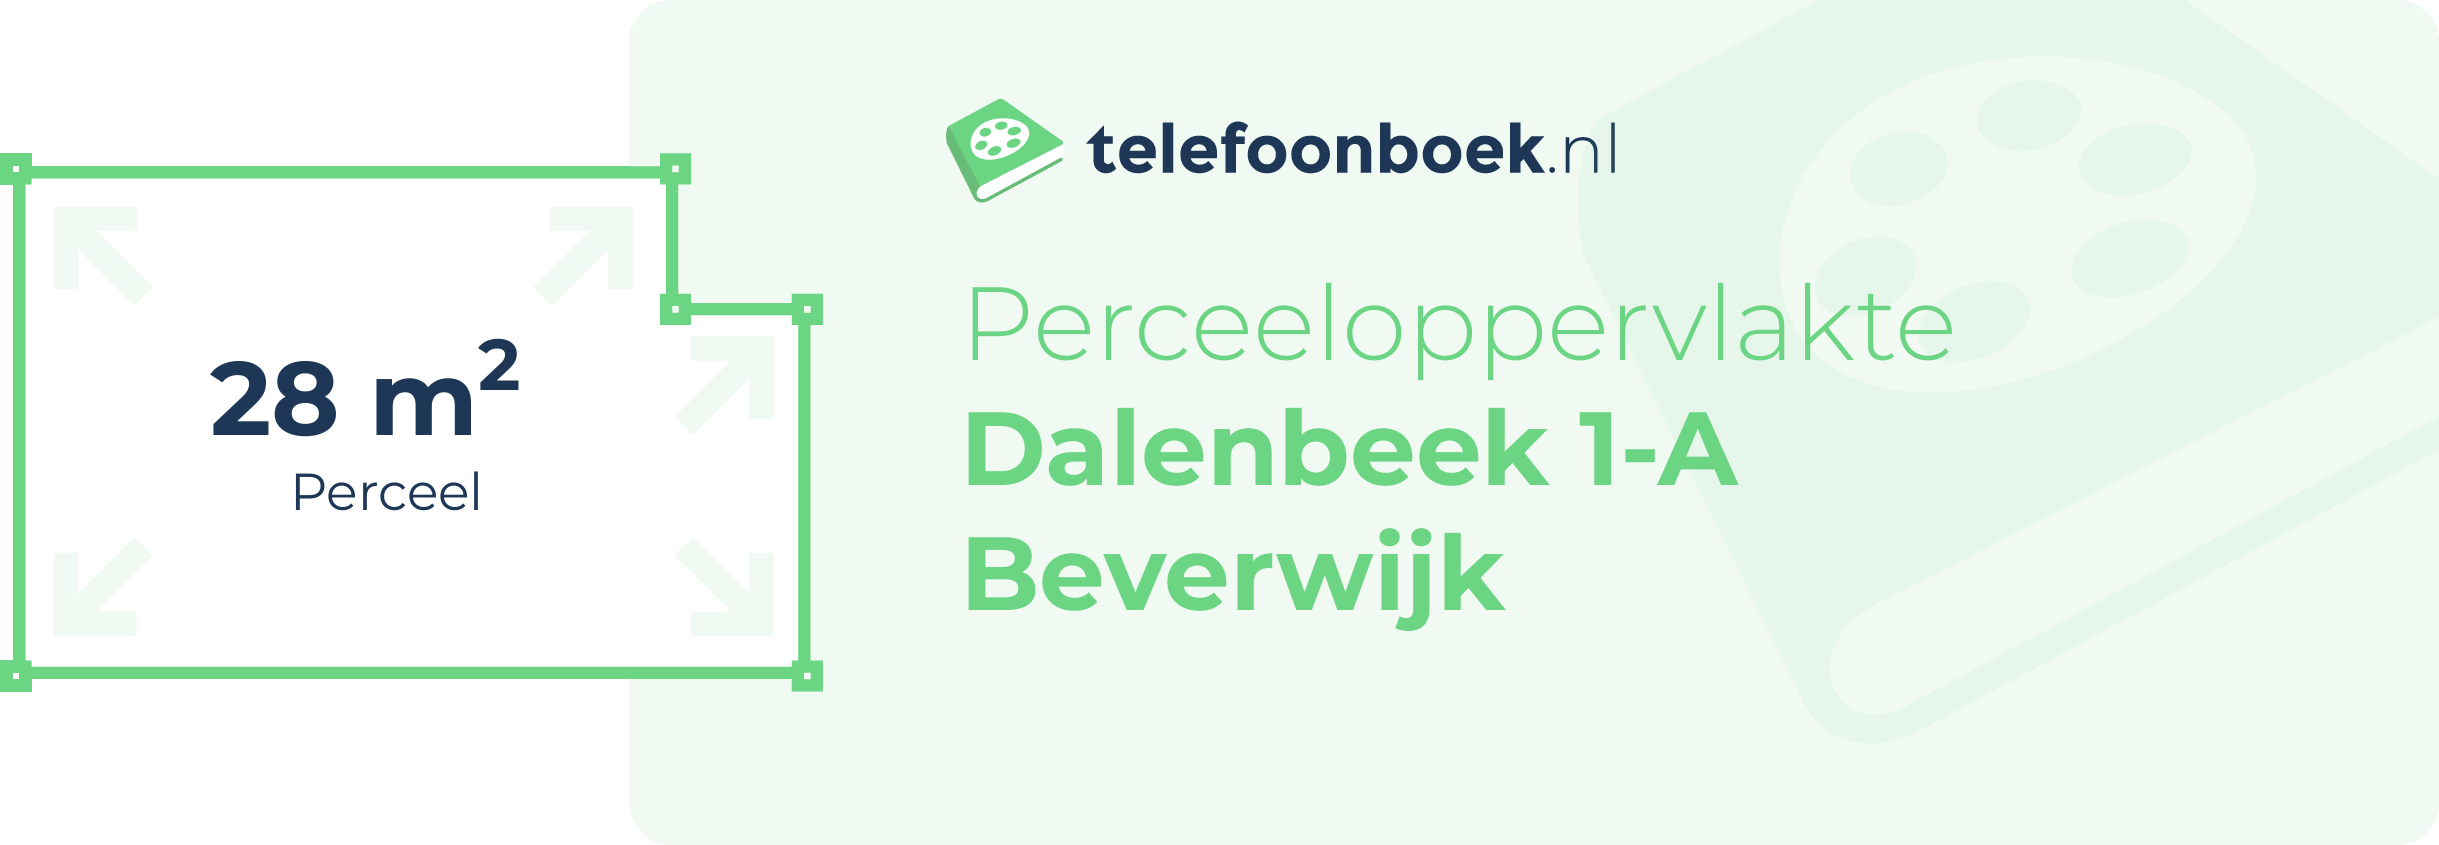 Perceeloppervlakte Dalenbeek 1-A Beverwijk